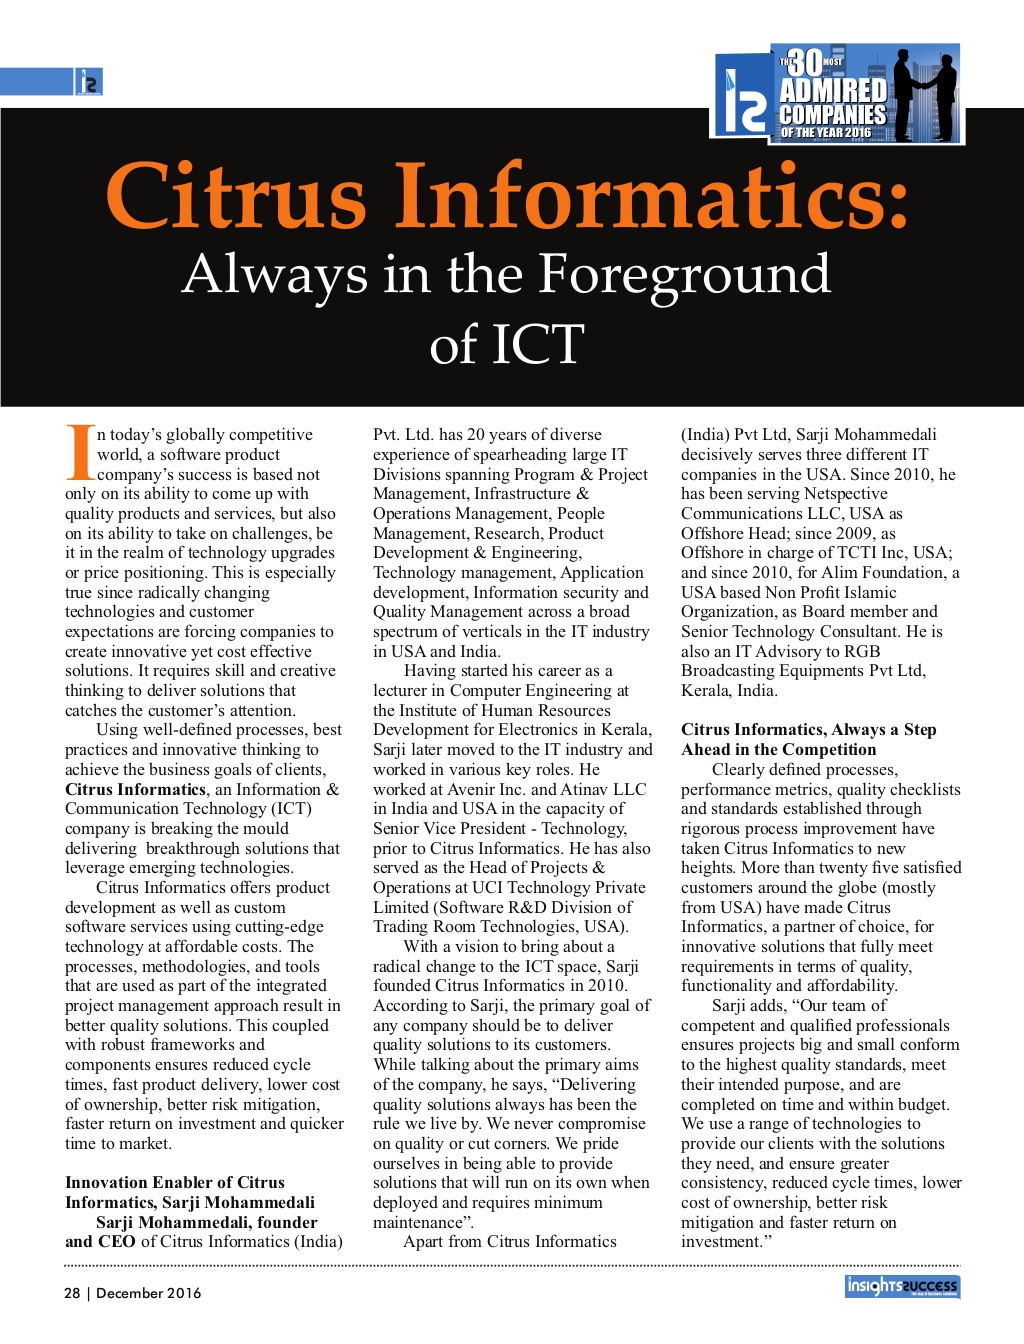 citrus-informatics-always-in-the-forground-of-ict-news